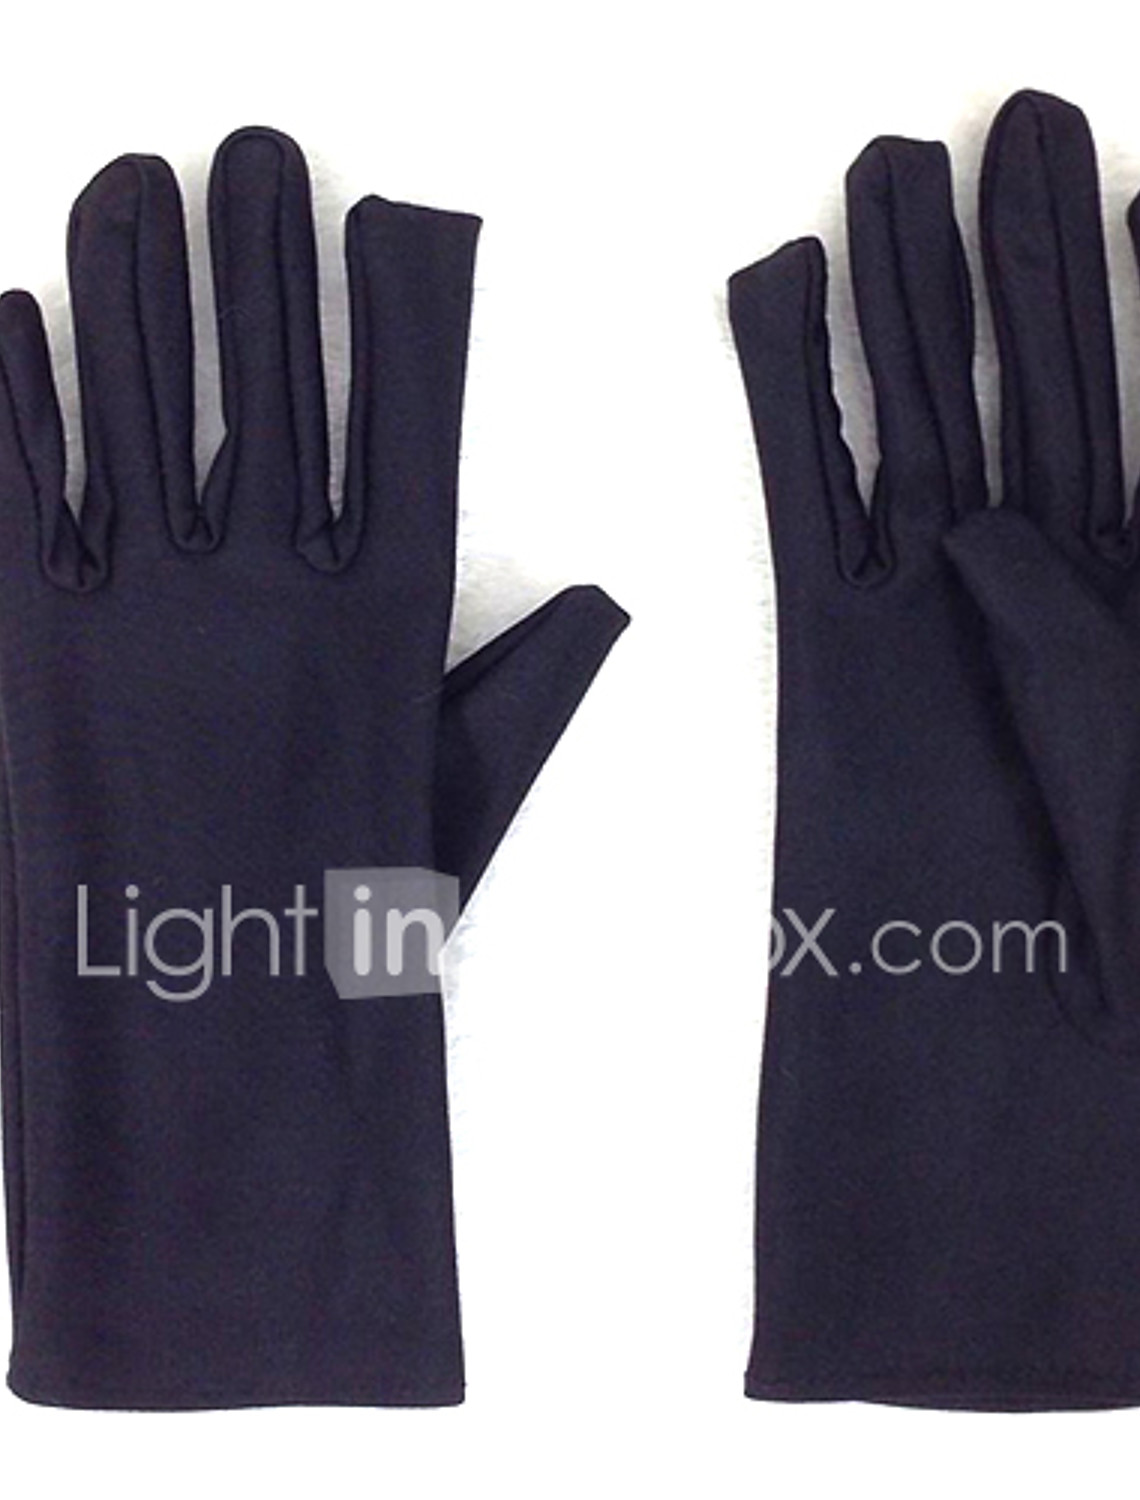 Hot Sword Art Online Kirito Gloves Cosplay Fingerless Mittens Warm Gloves Gift